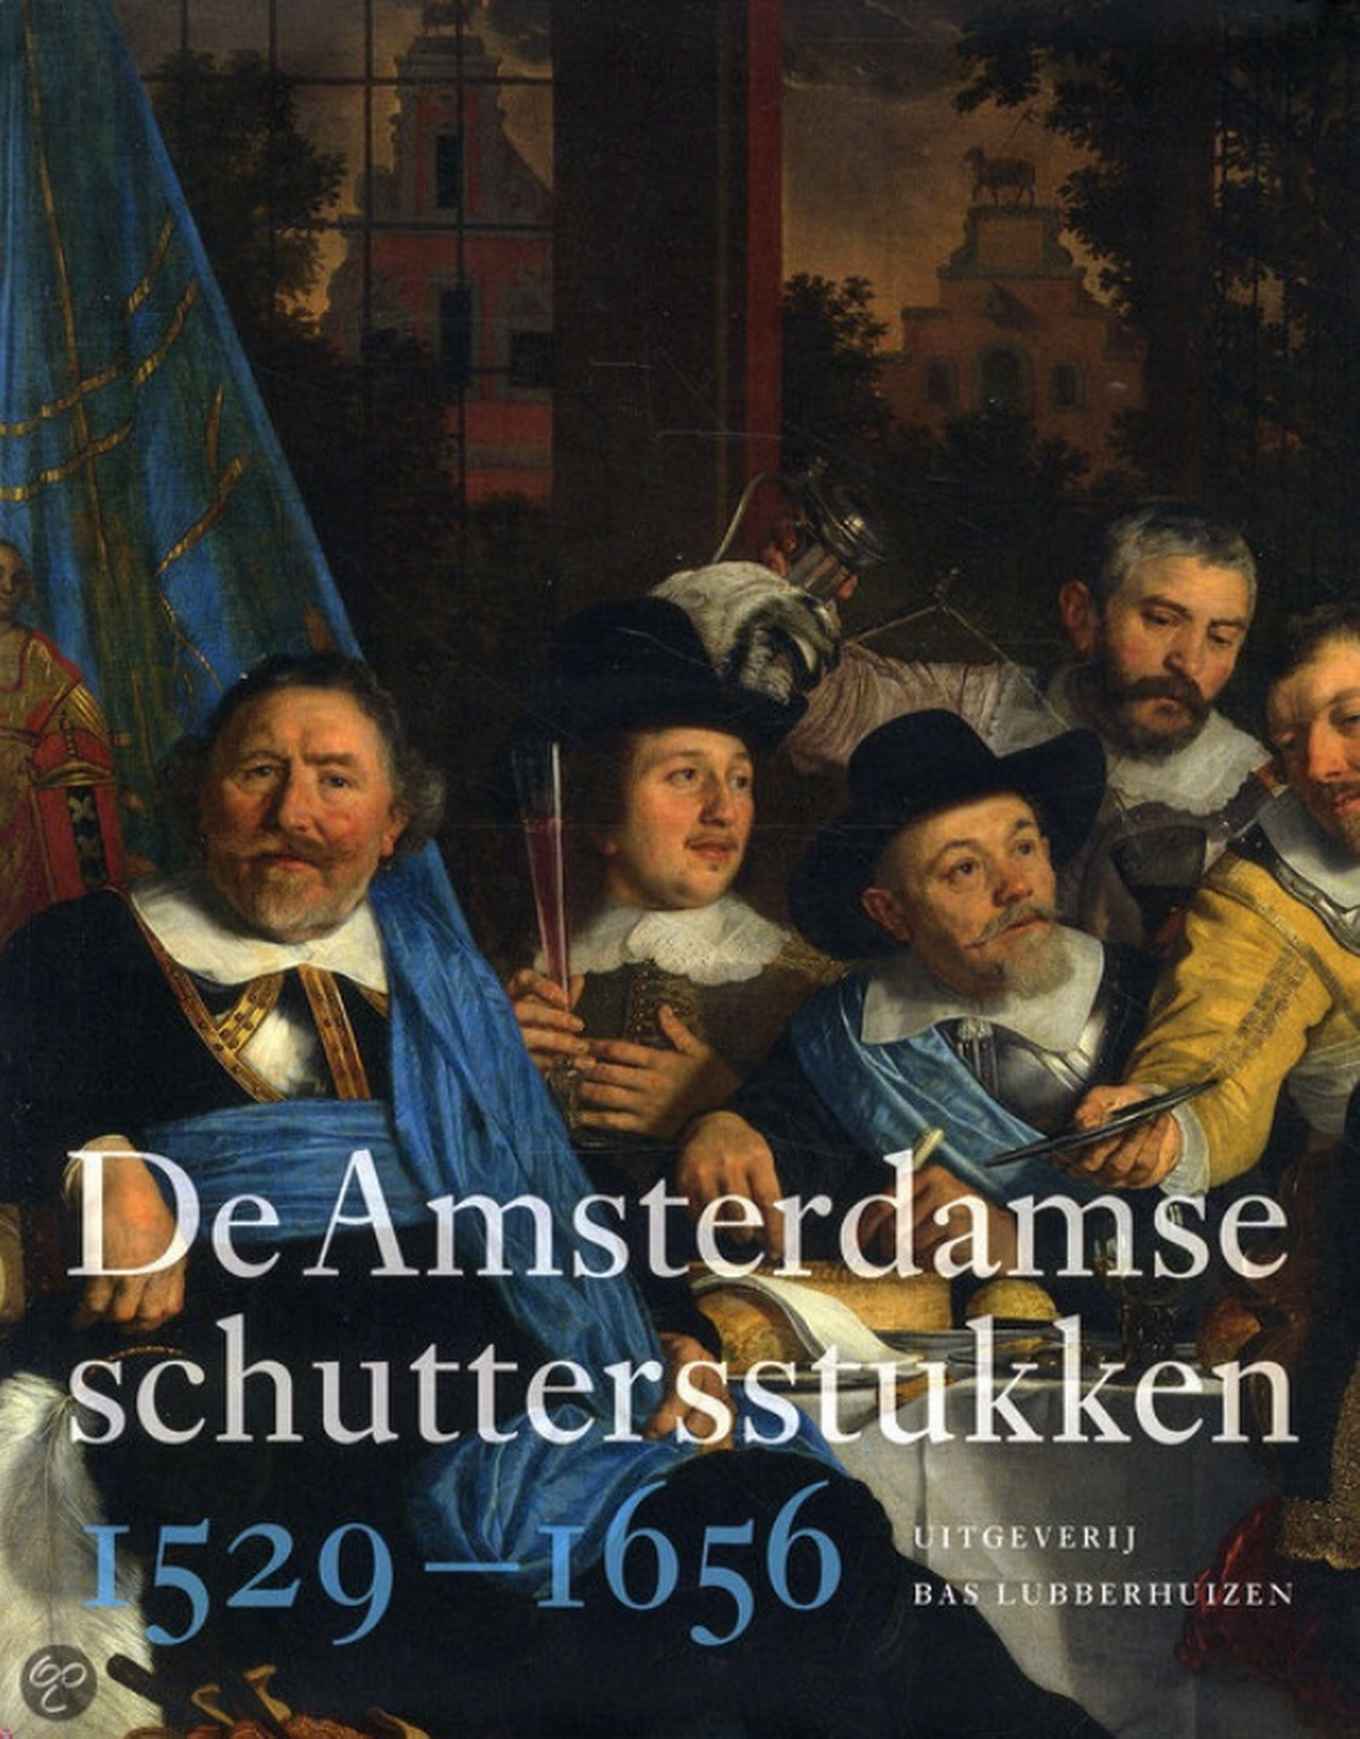 De Amsterdamse schuttersstukken 1529 - 1656